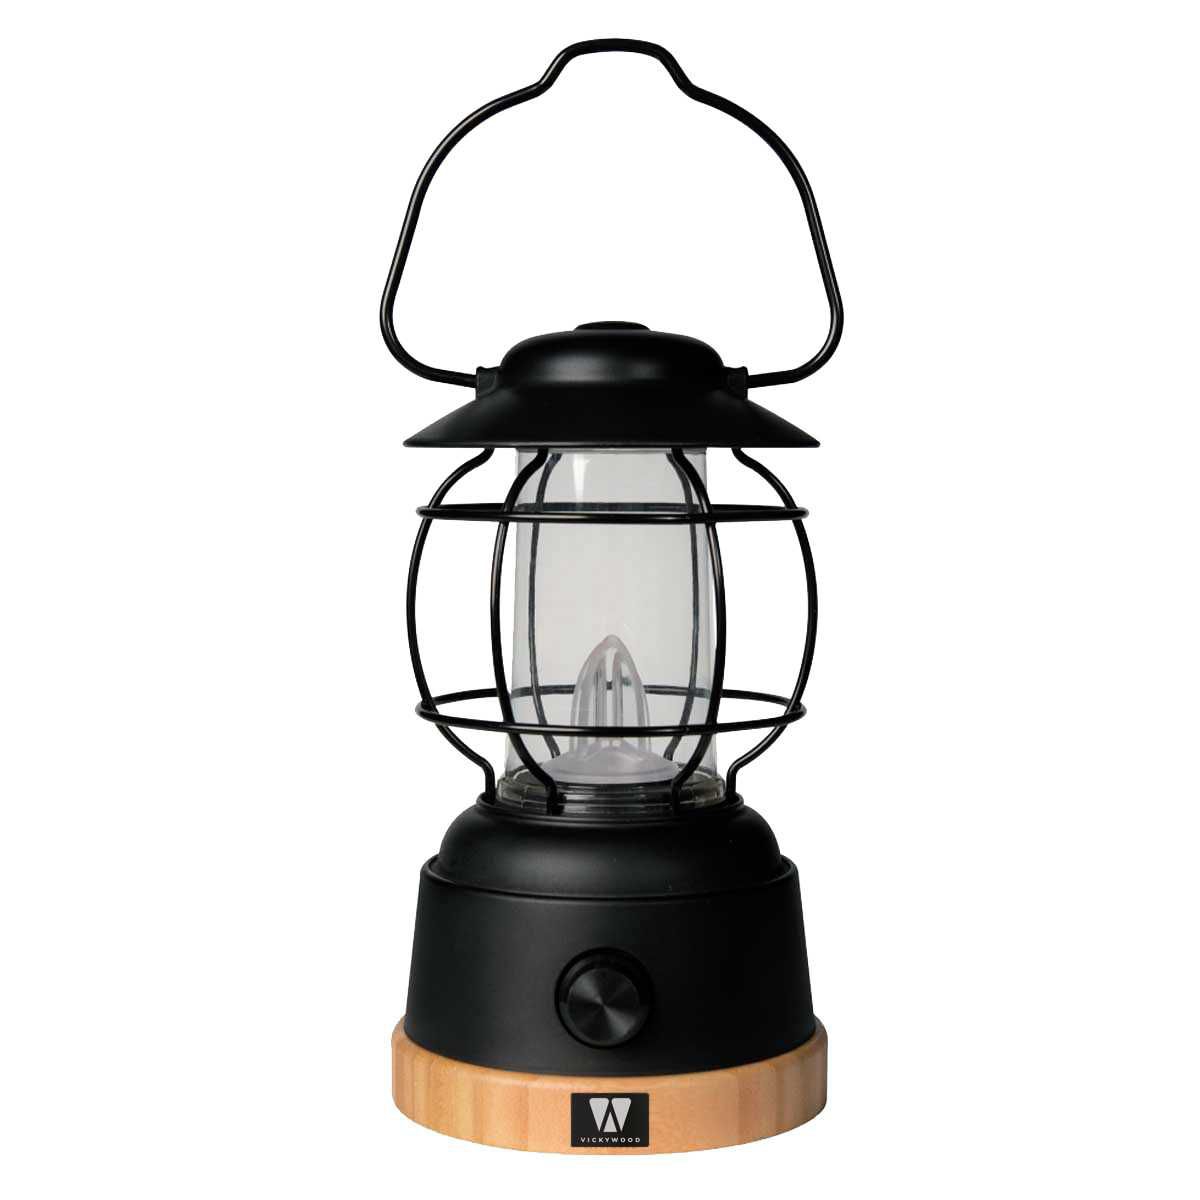 VICKYWOOD WOODY Lantern Campinglampe dimmbar - VW-LT-01